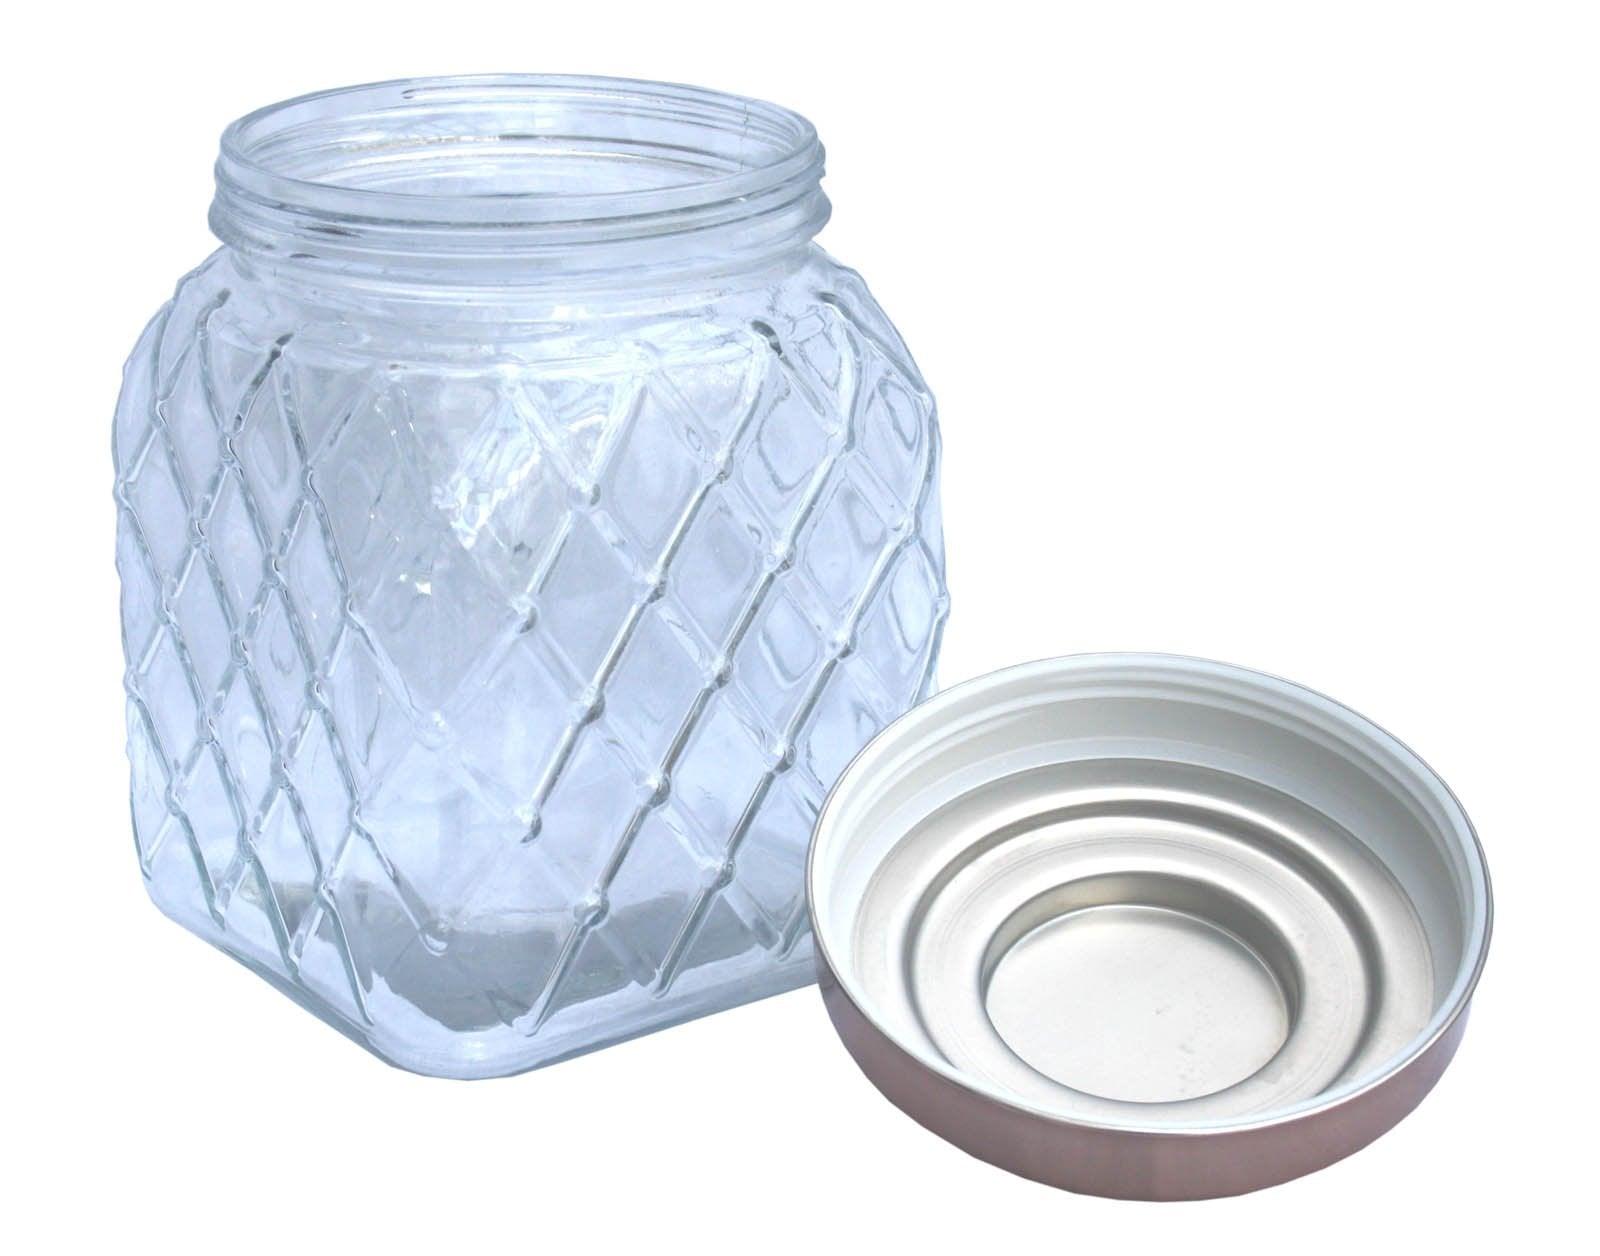 Copper Lidded Square Glass Jar - £20.99 - Kitchen Storage 